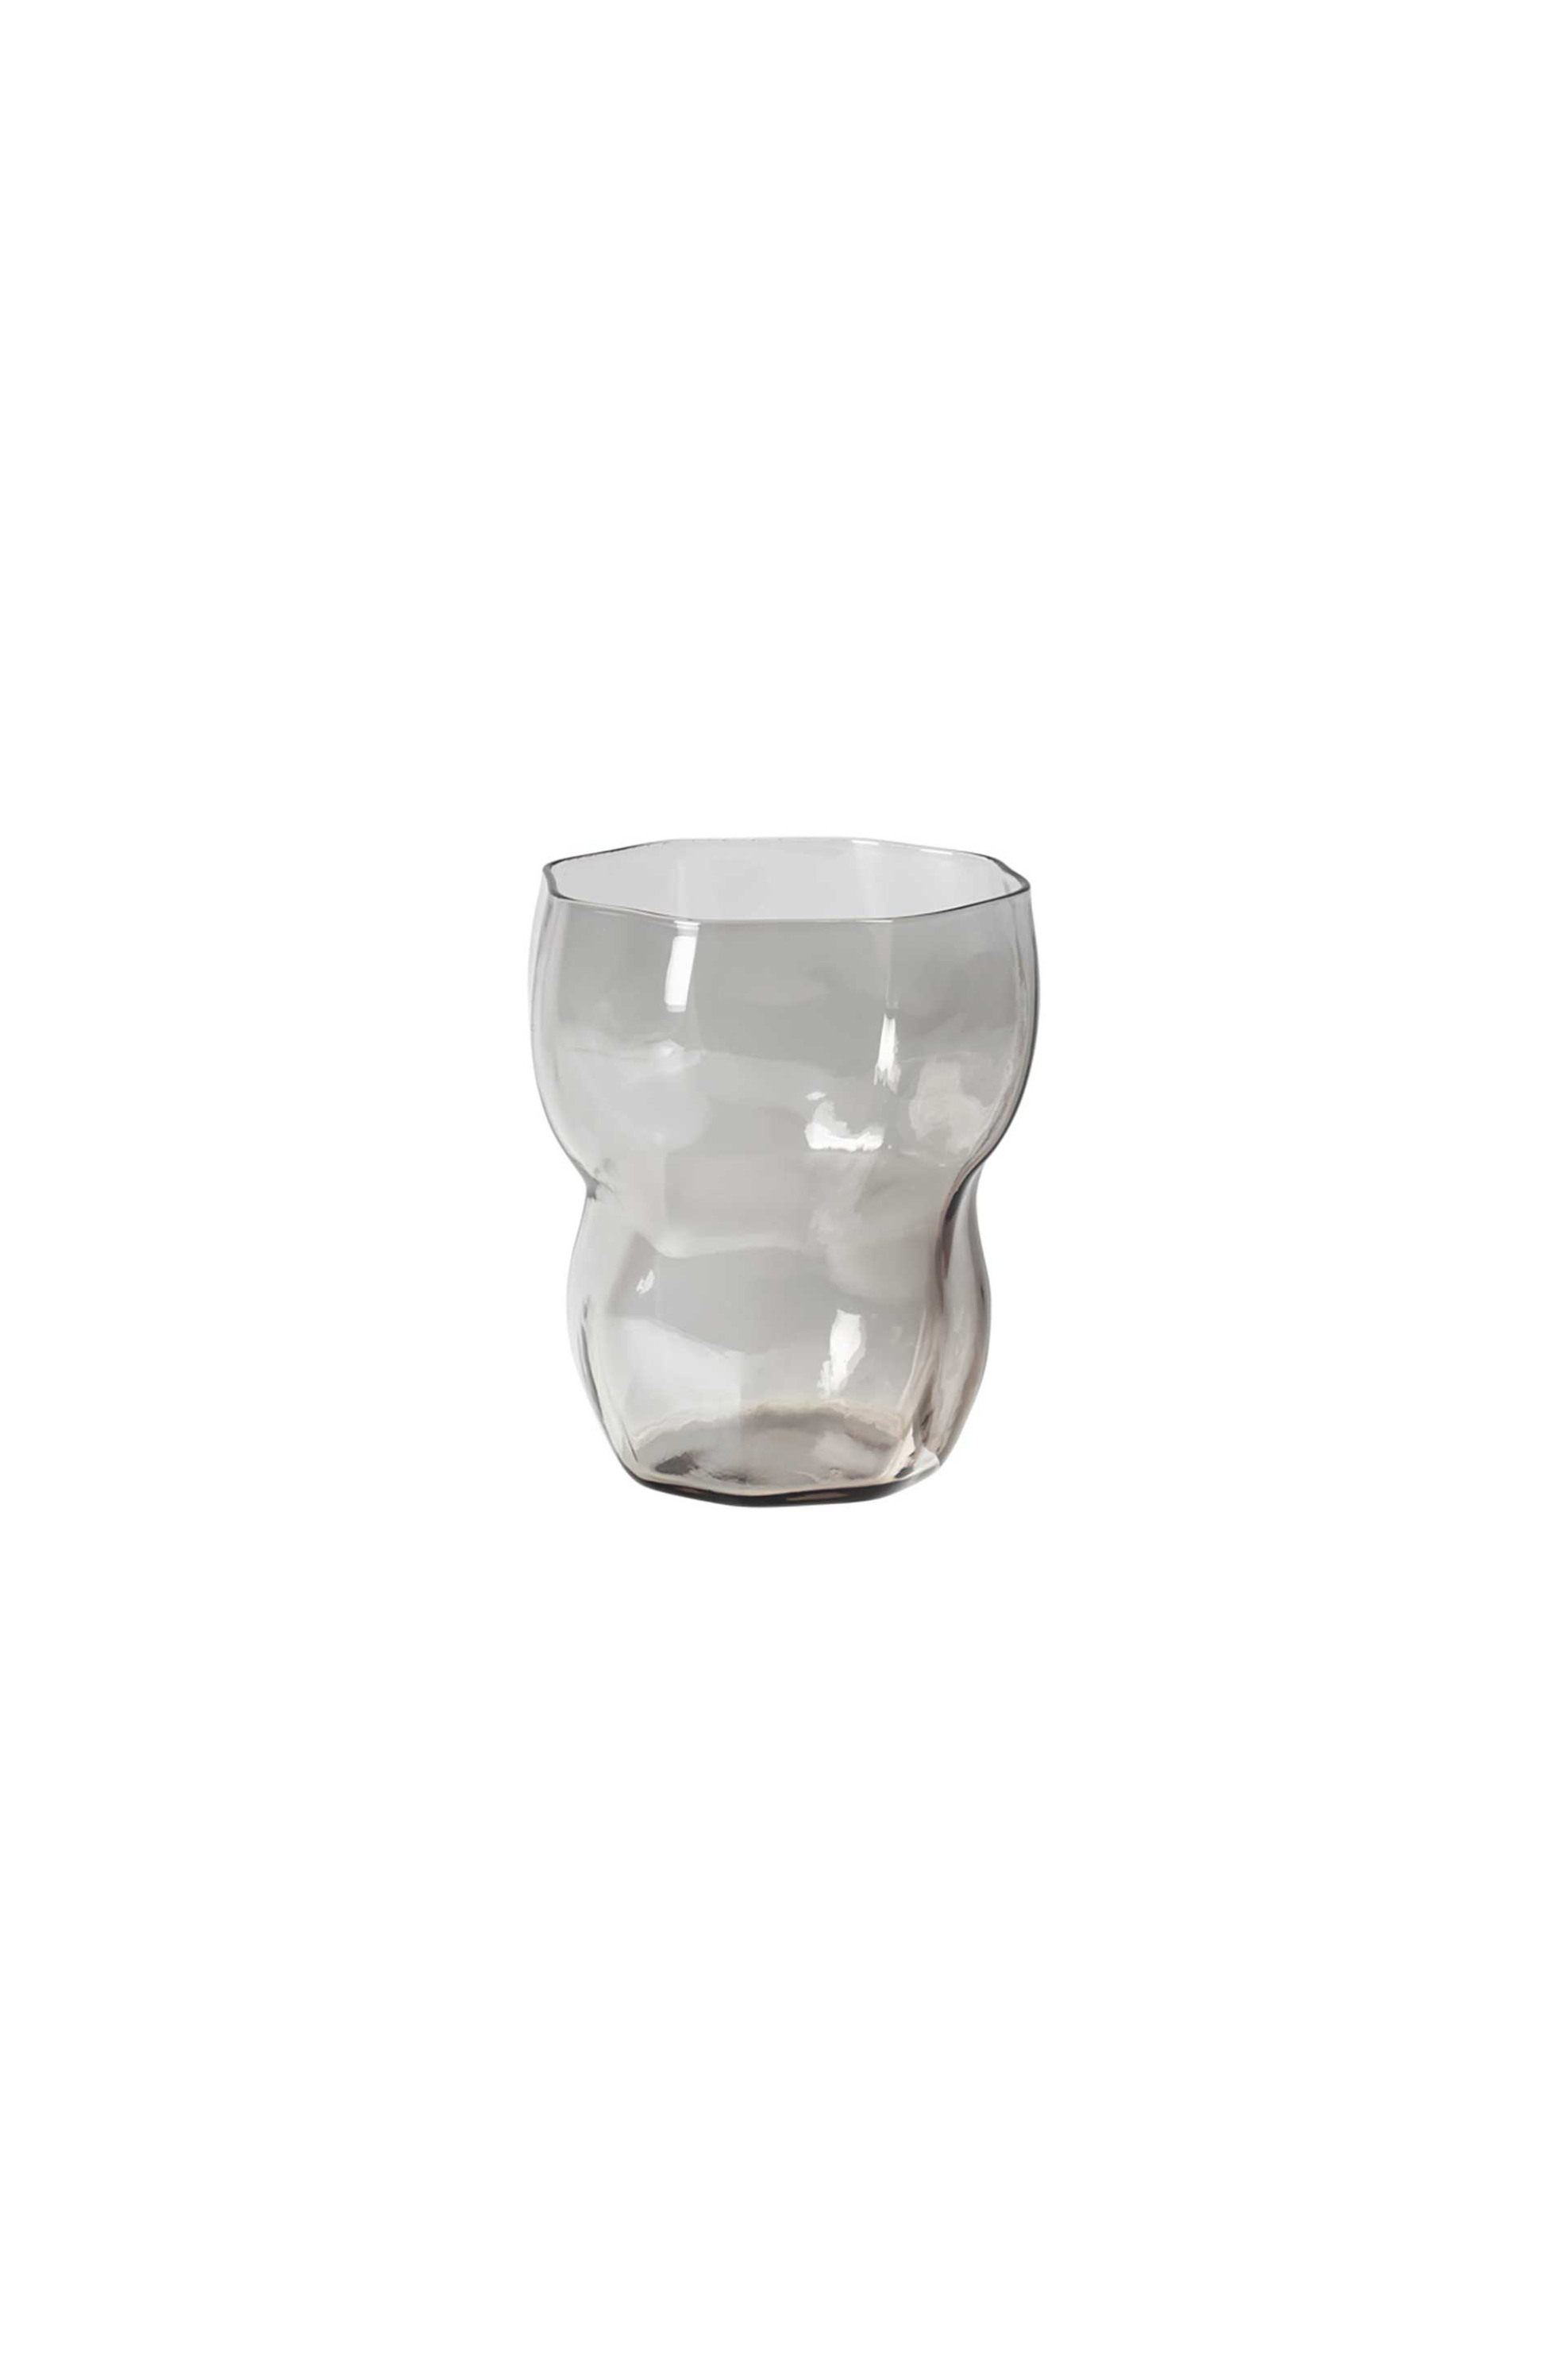 Home > ΚΟΥΖΙΝΑ > Υαλικά > Ποτήρια Broste Copenhagen γυάλινο ποτήρι νερού μονόχρωμο "Limfjord" 9 x 10,7 cm - 14496226 Γκρι